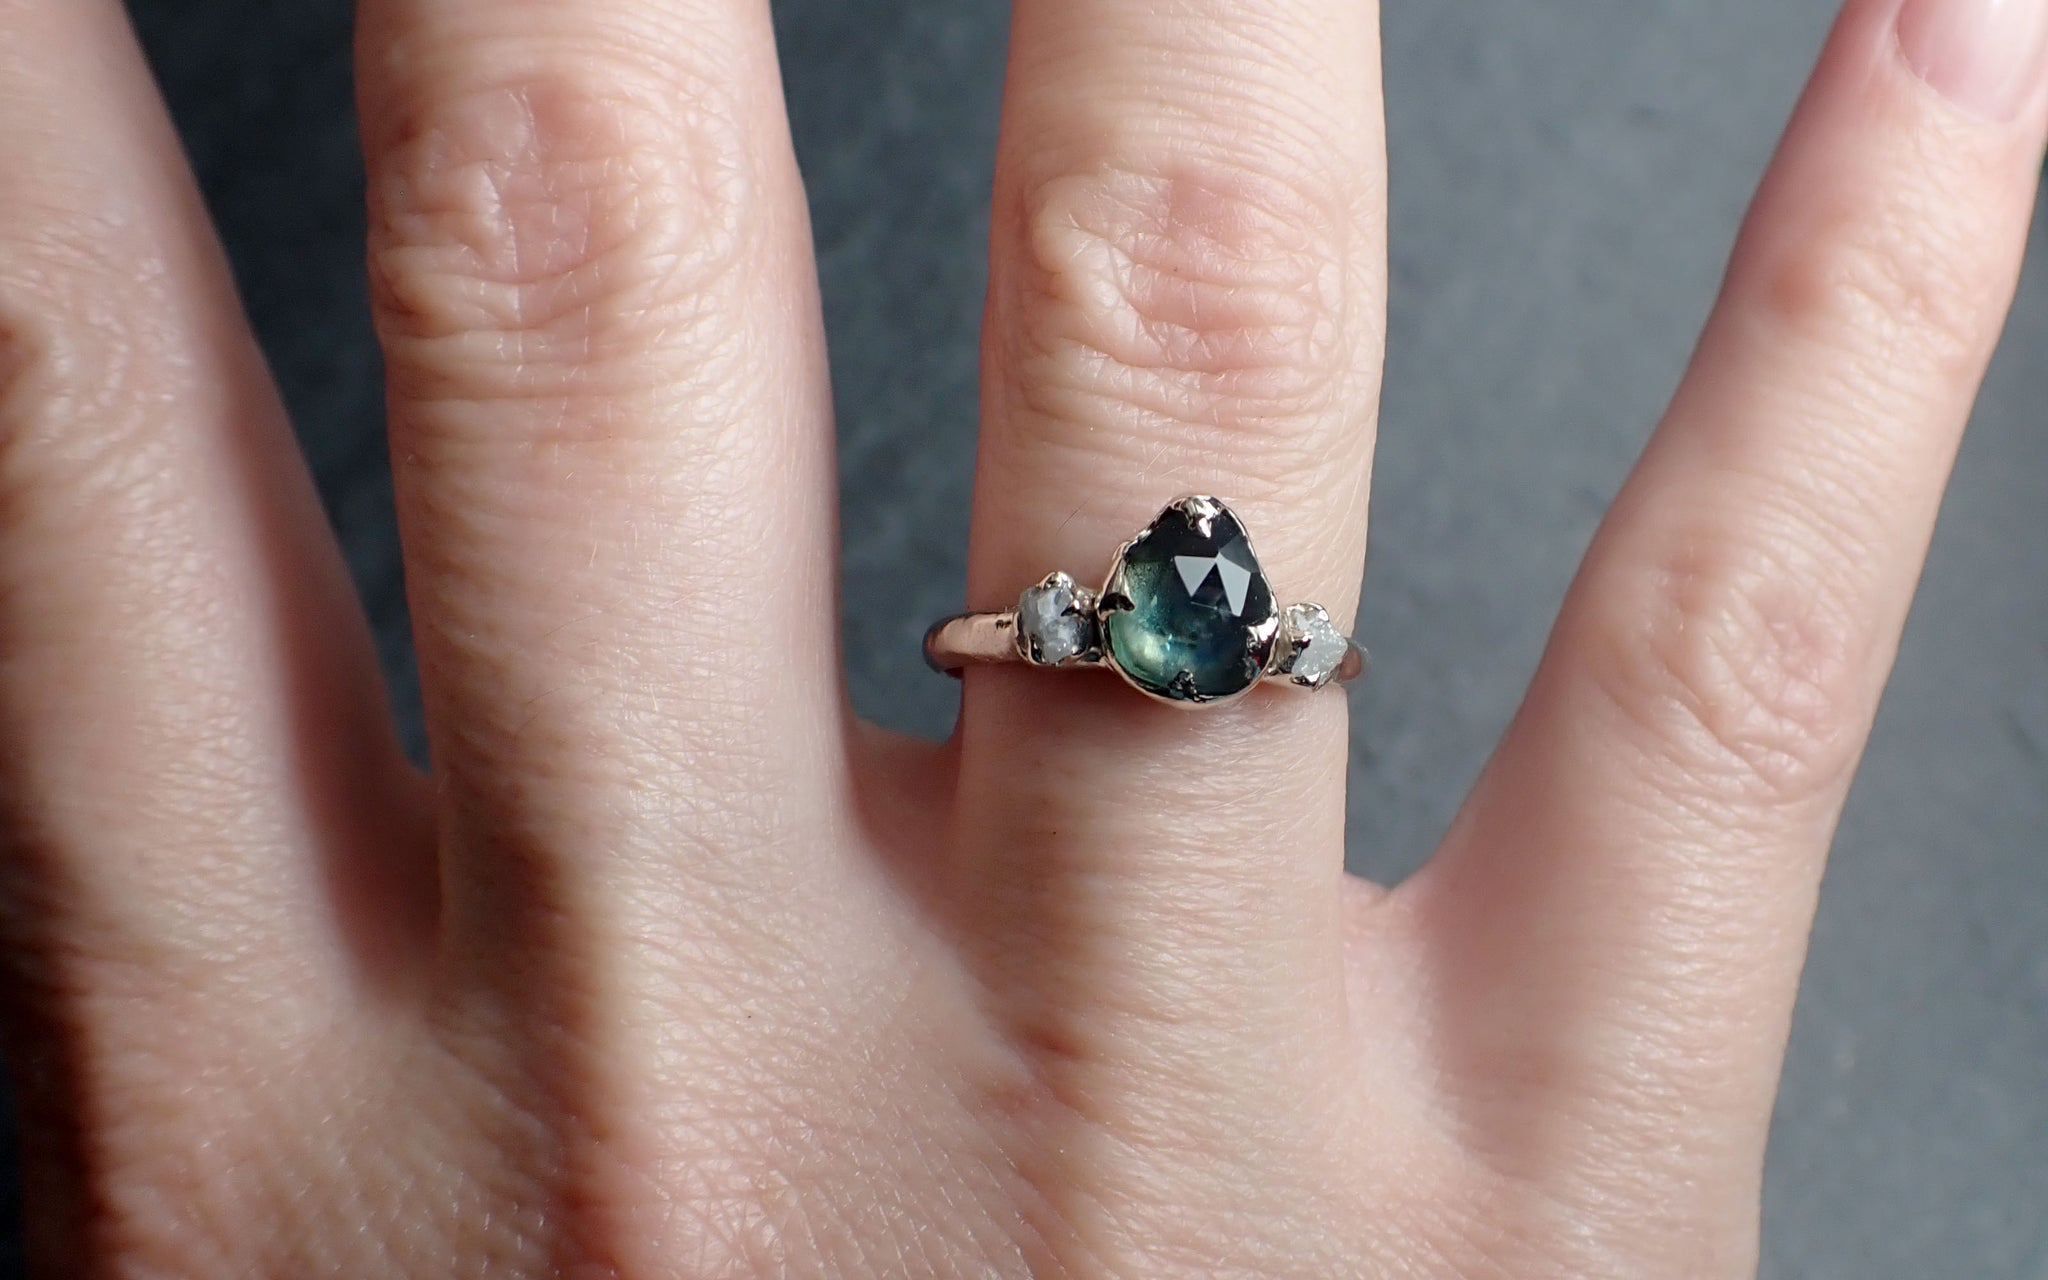 fancy cut montana sapphire diamond 14k white gold engagement ring wedding ring blue gemstone ring multi stone ring 2691 Alternative Engagement